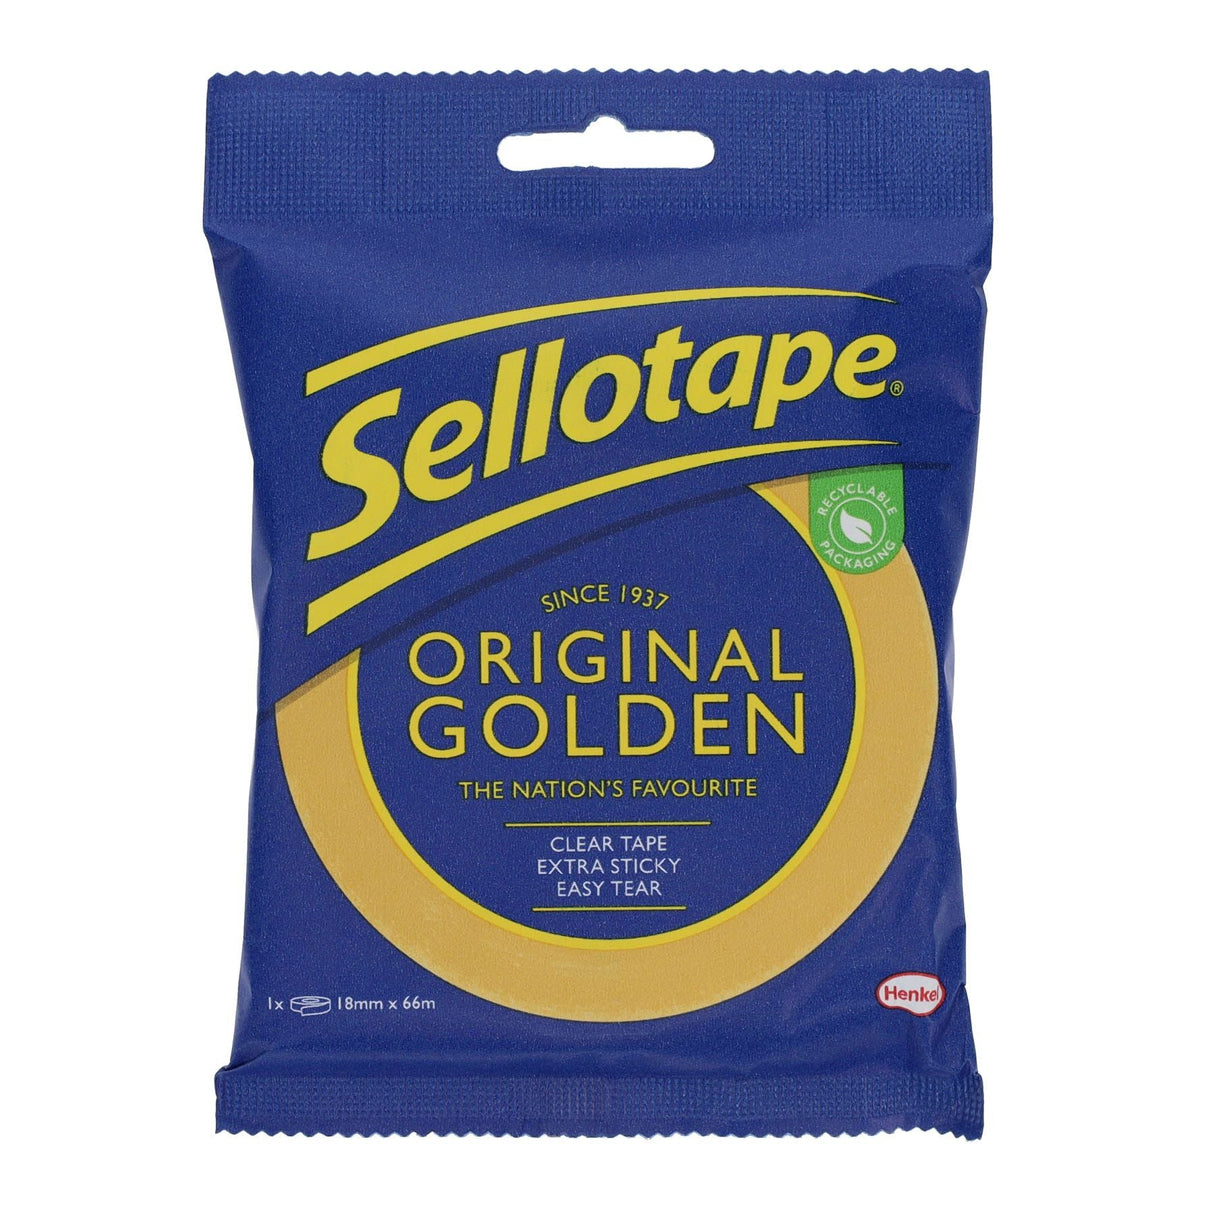 Sellotape Original Golden Tape 18Mmx66m-Tape Dispensers & Refills-Sellotape|StationeryShop.co.uk